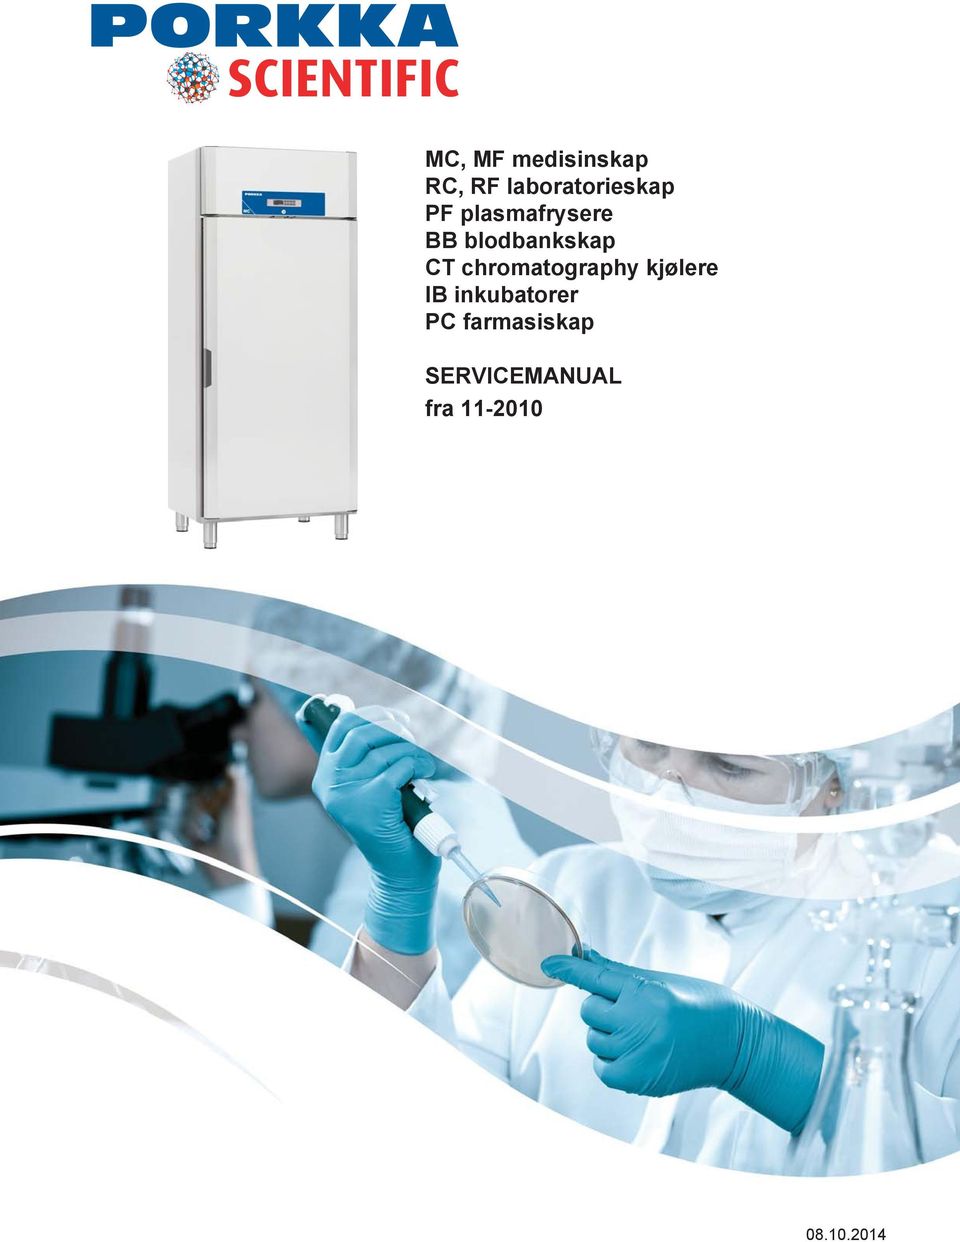 chromatography kjølere IB inkubatorer PC